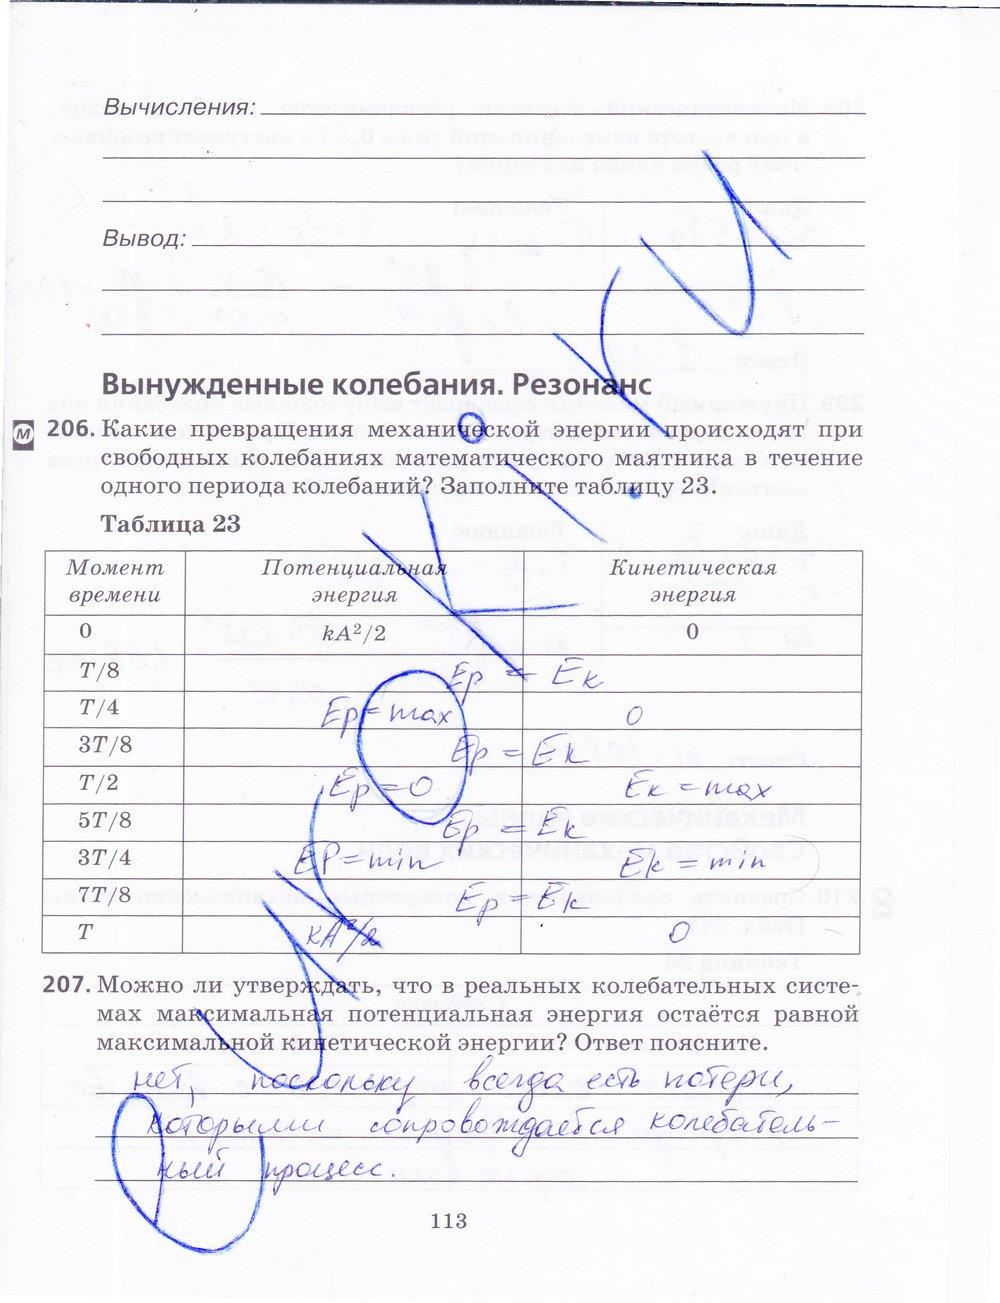 гдз 9 класс рабочая тетрадь страница 113 физика Пурышева, Важеевская, Чаругин